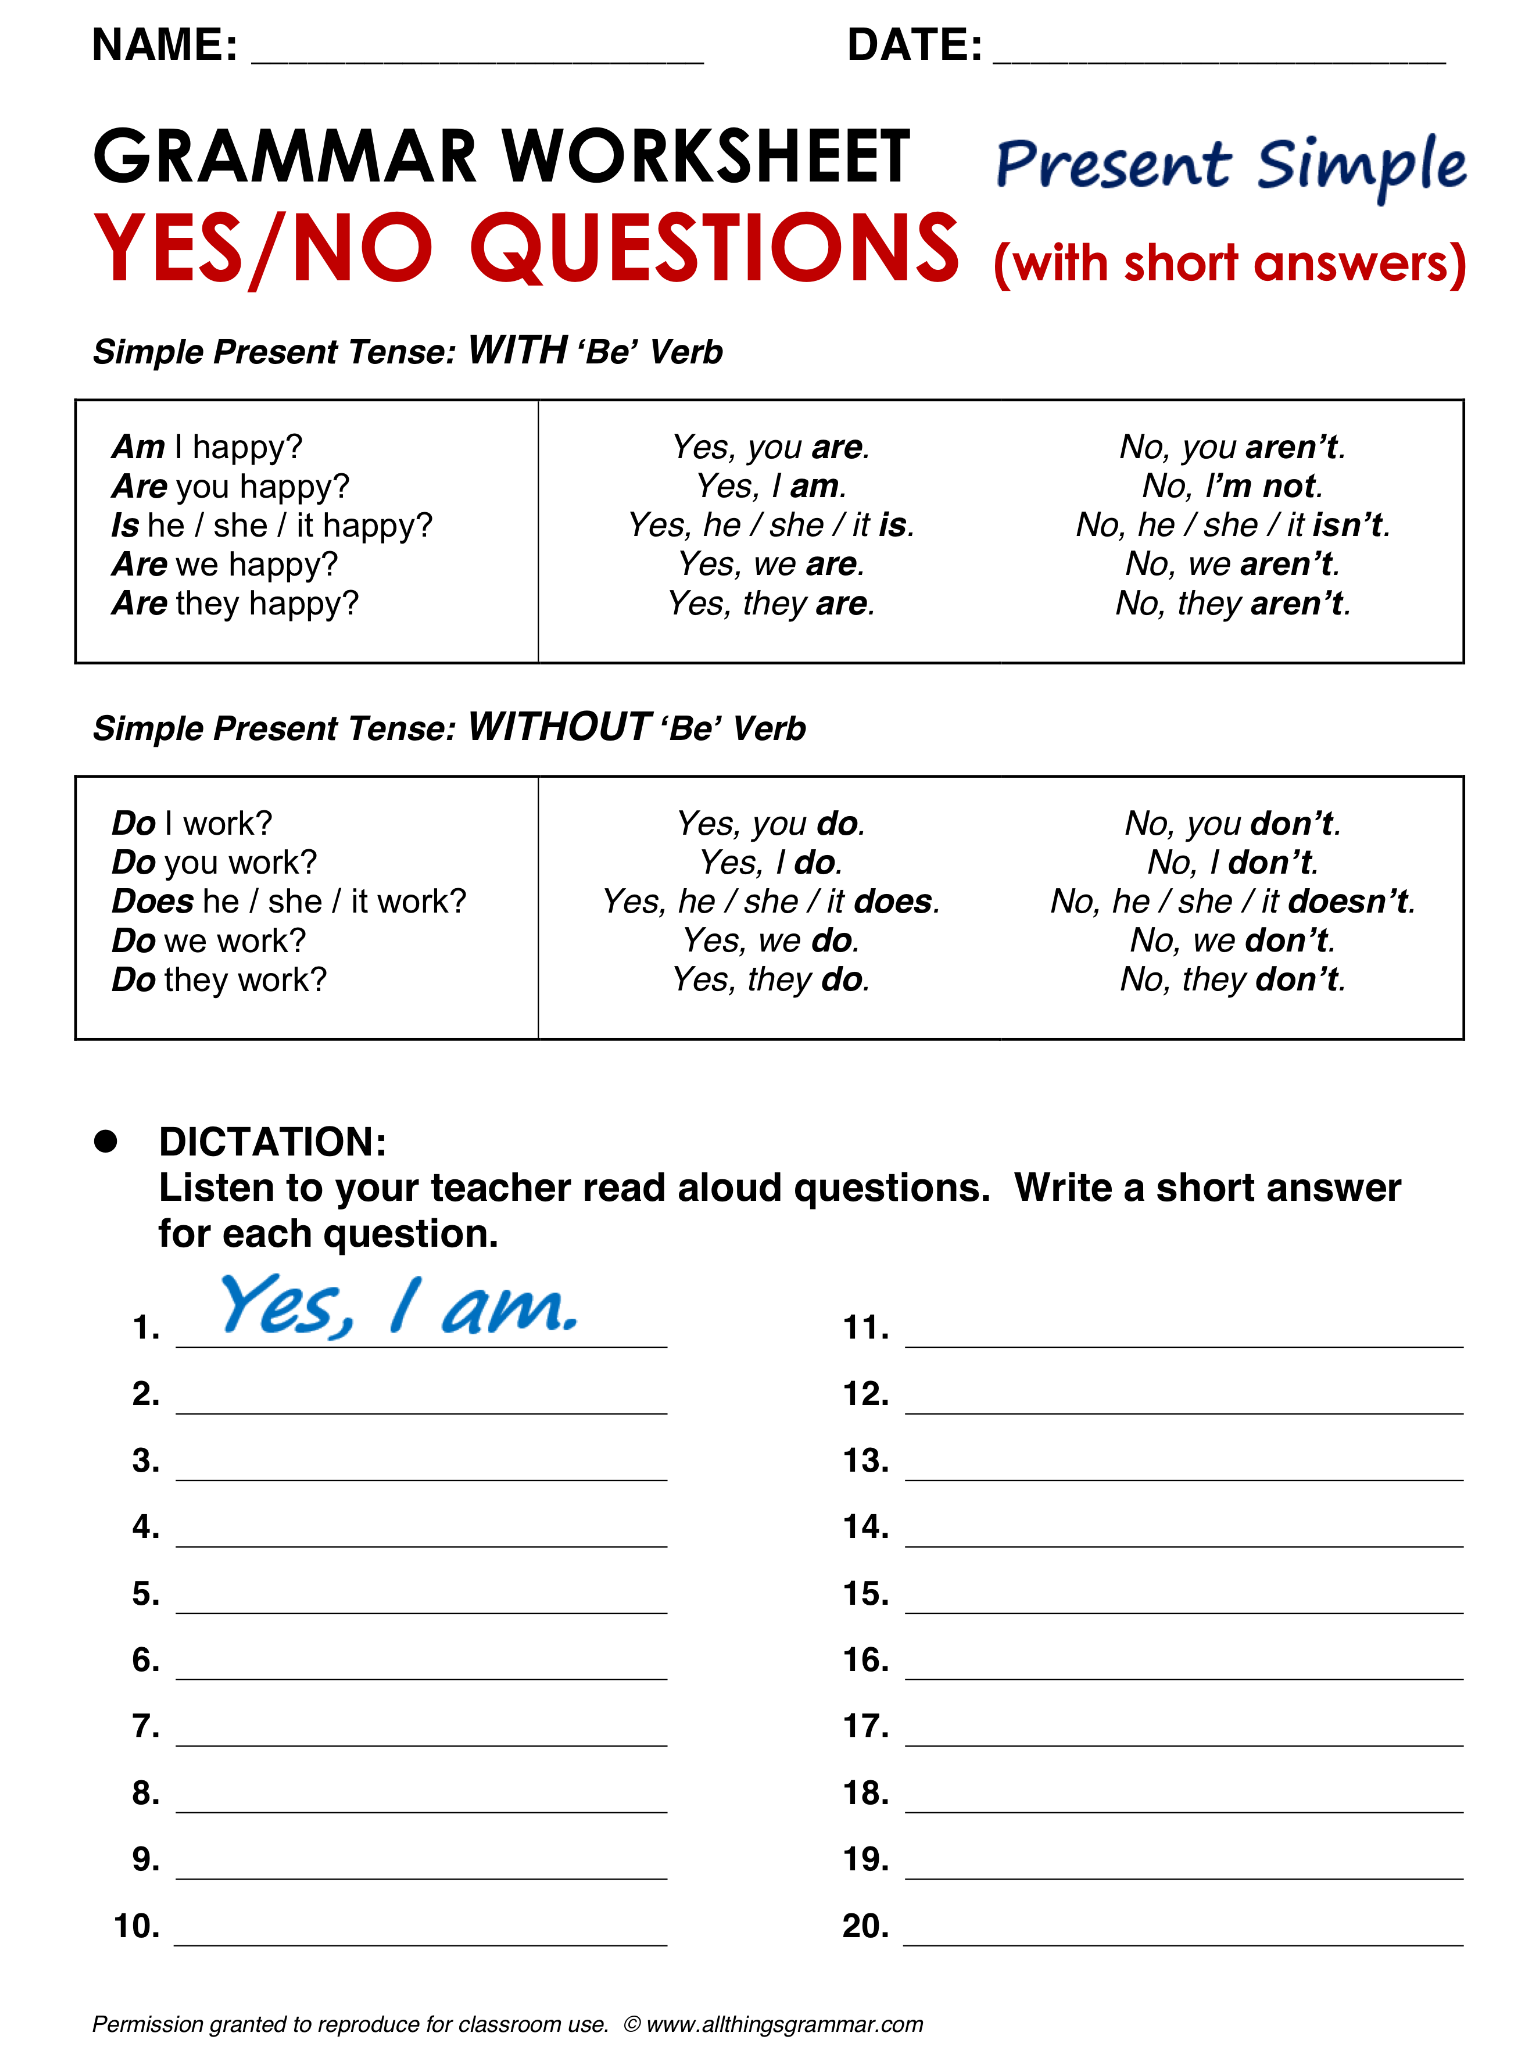 Short answer forms. Present simple вопросы Worksheets. Worksheets грамматика. Грамматика present simple. Past simple грамматика.